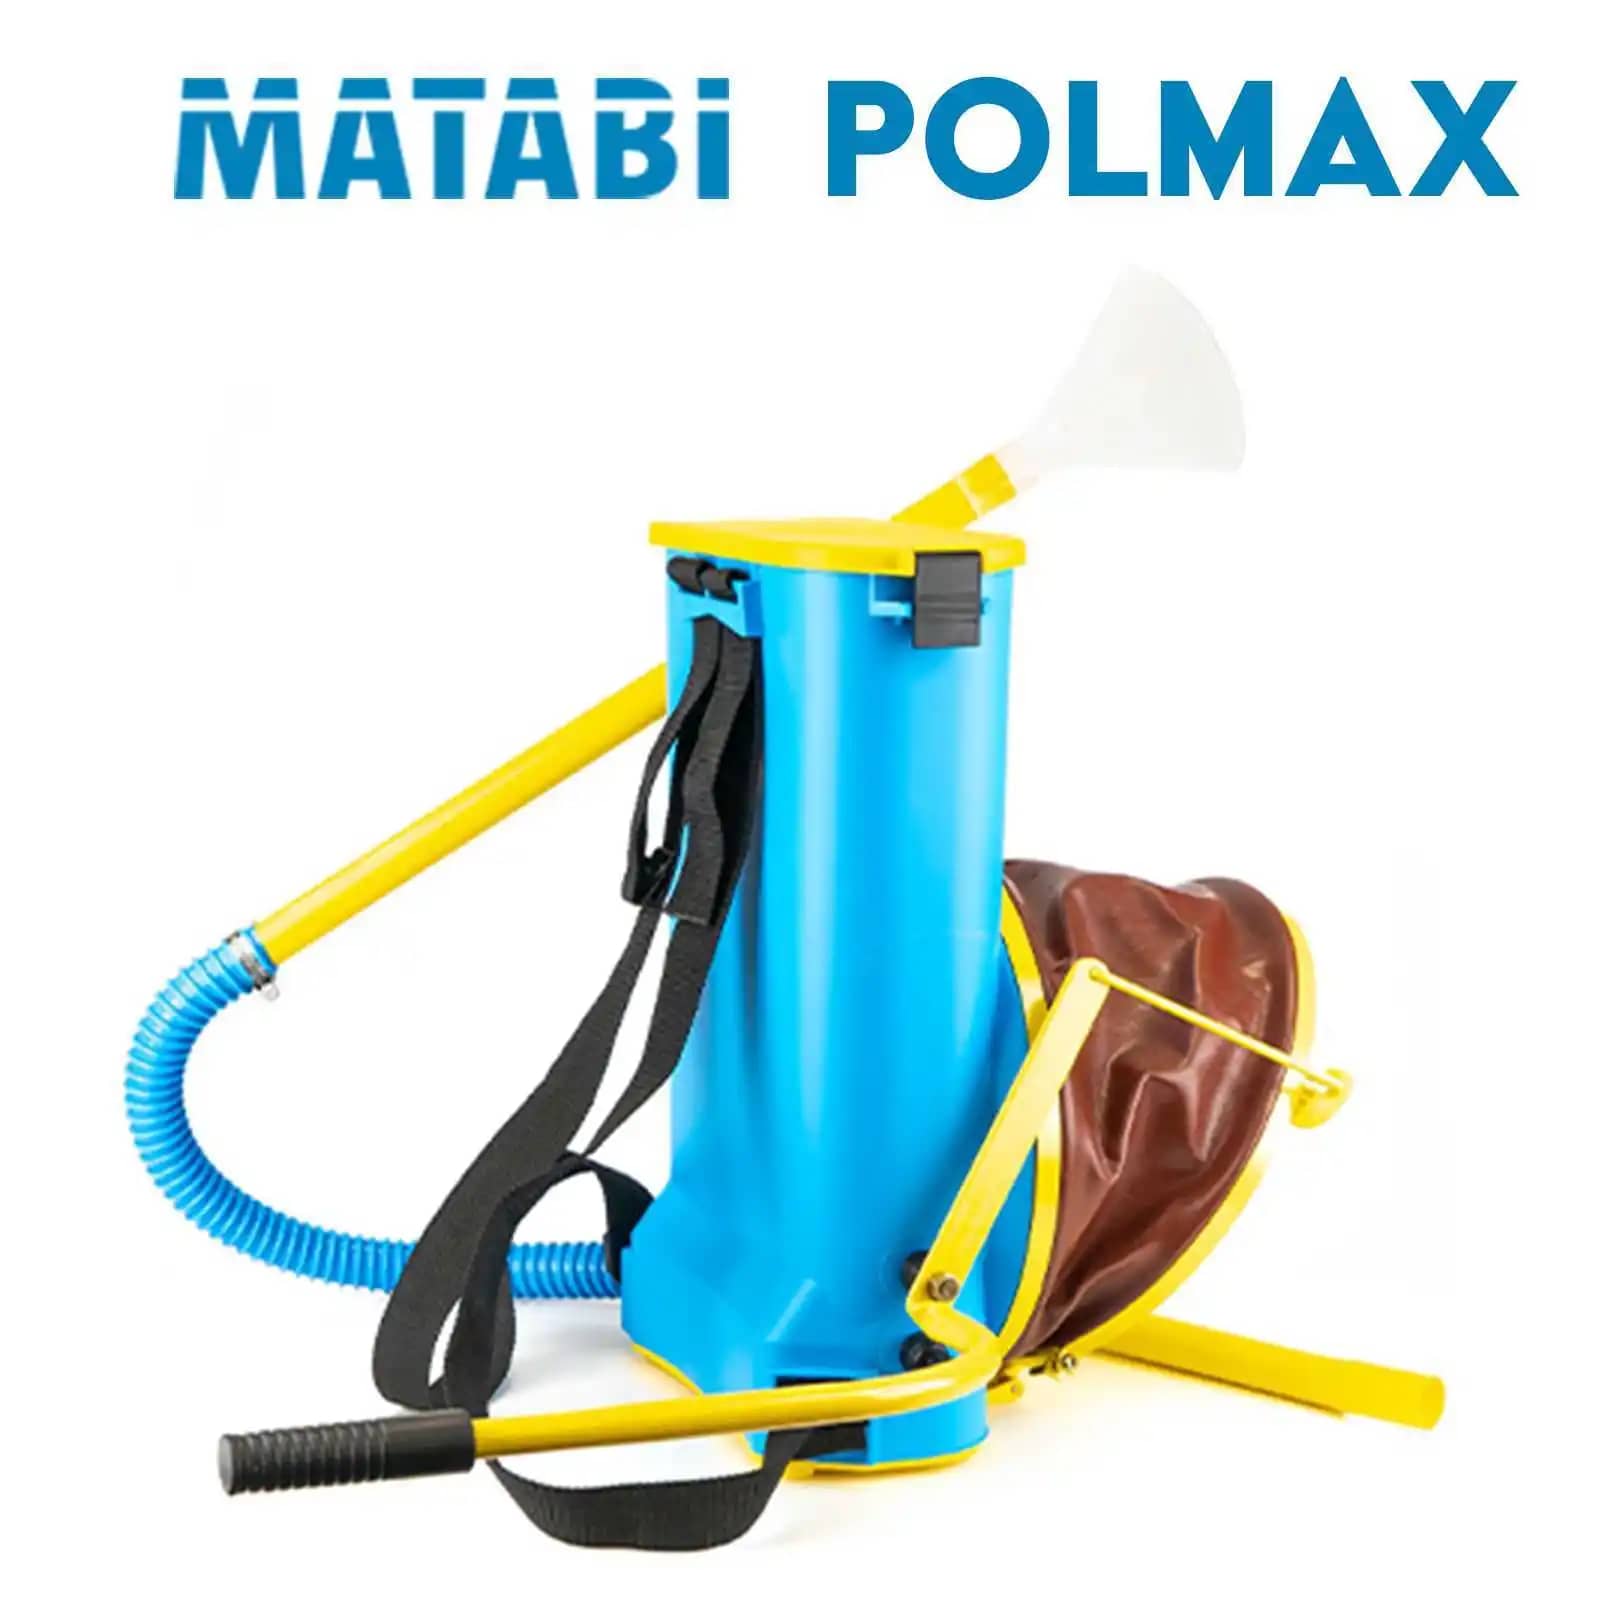 Espolvoreadora Polmax 9 Lt - Matabi